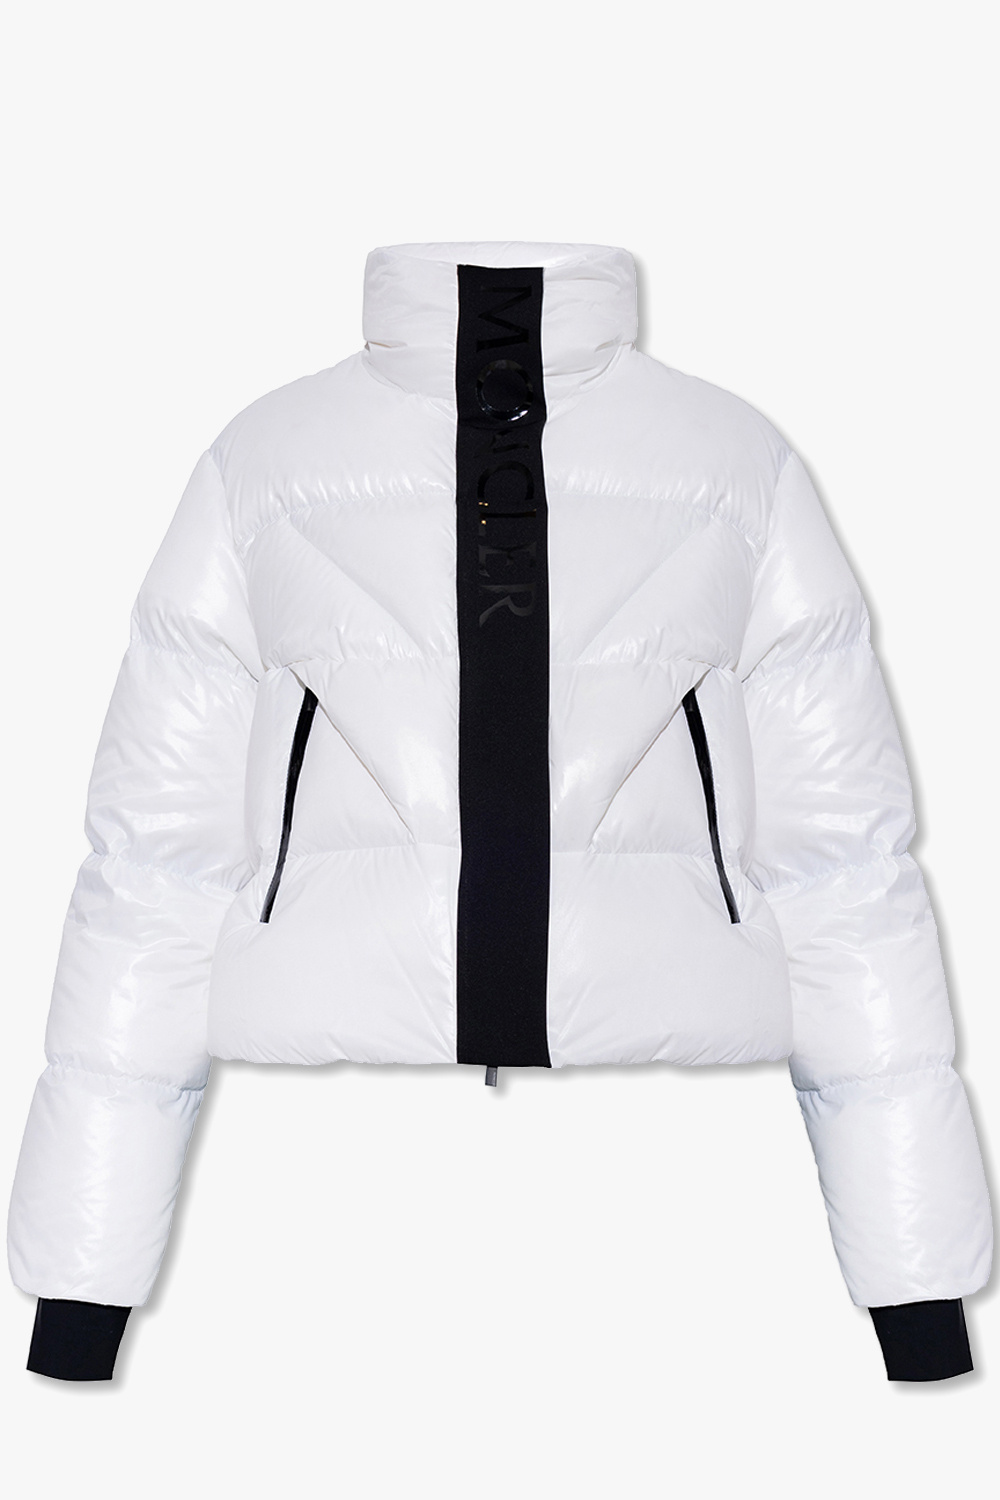 Moncler ‘Claret’ LEATHER jacket